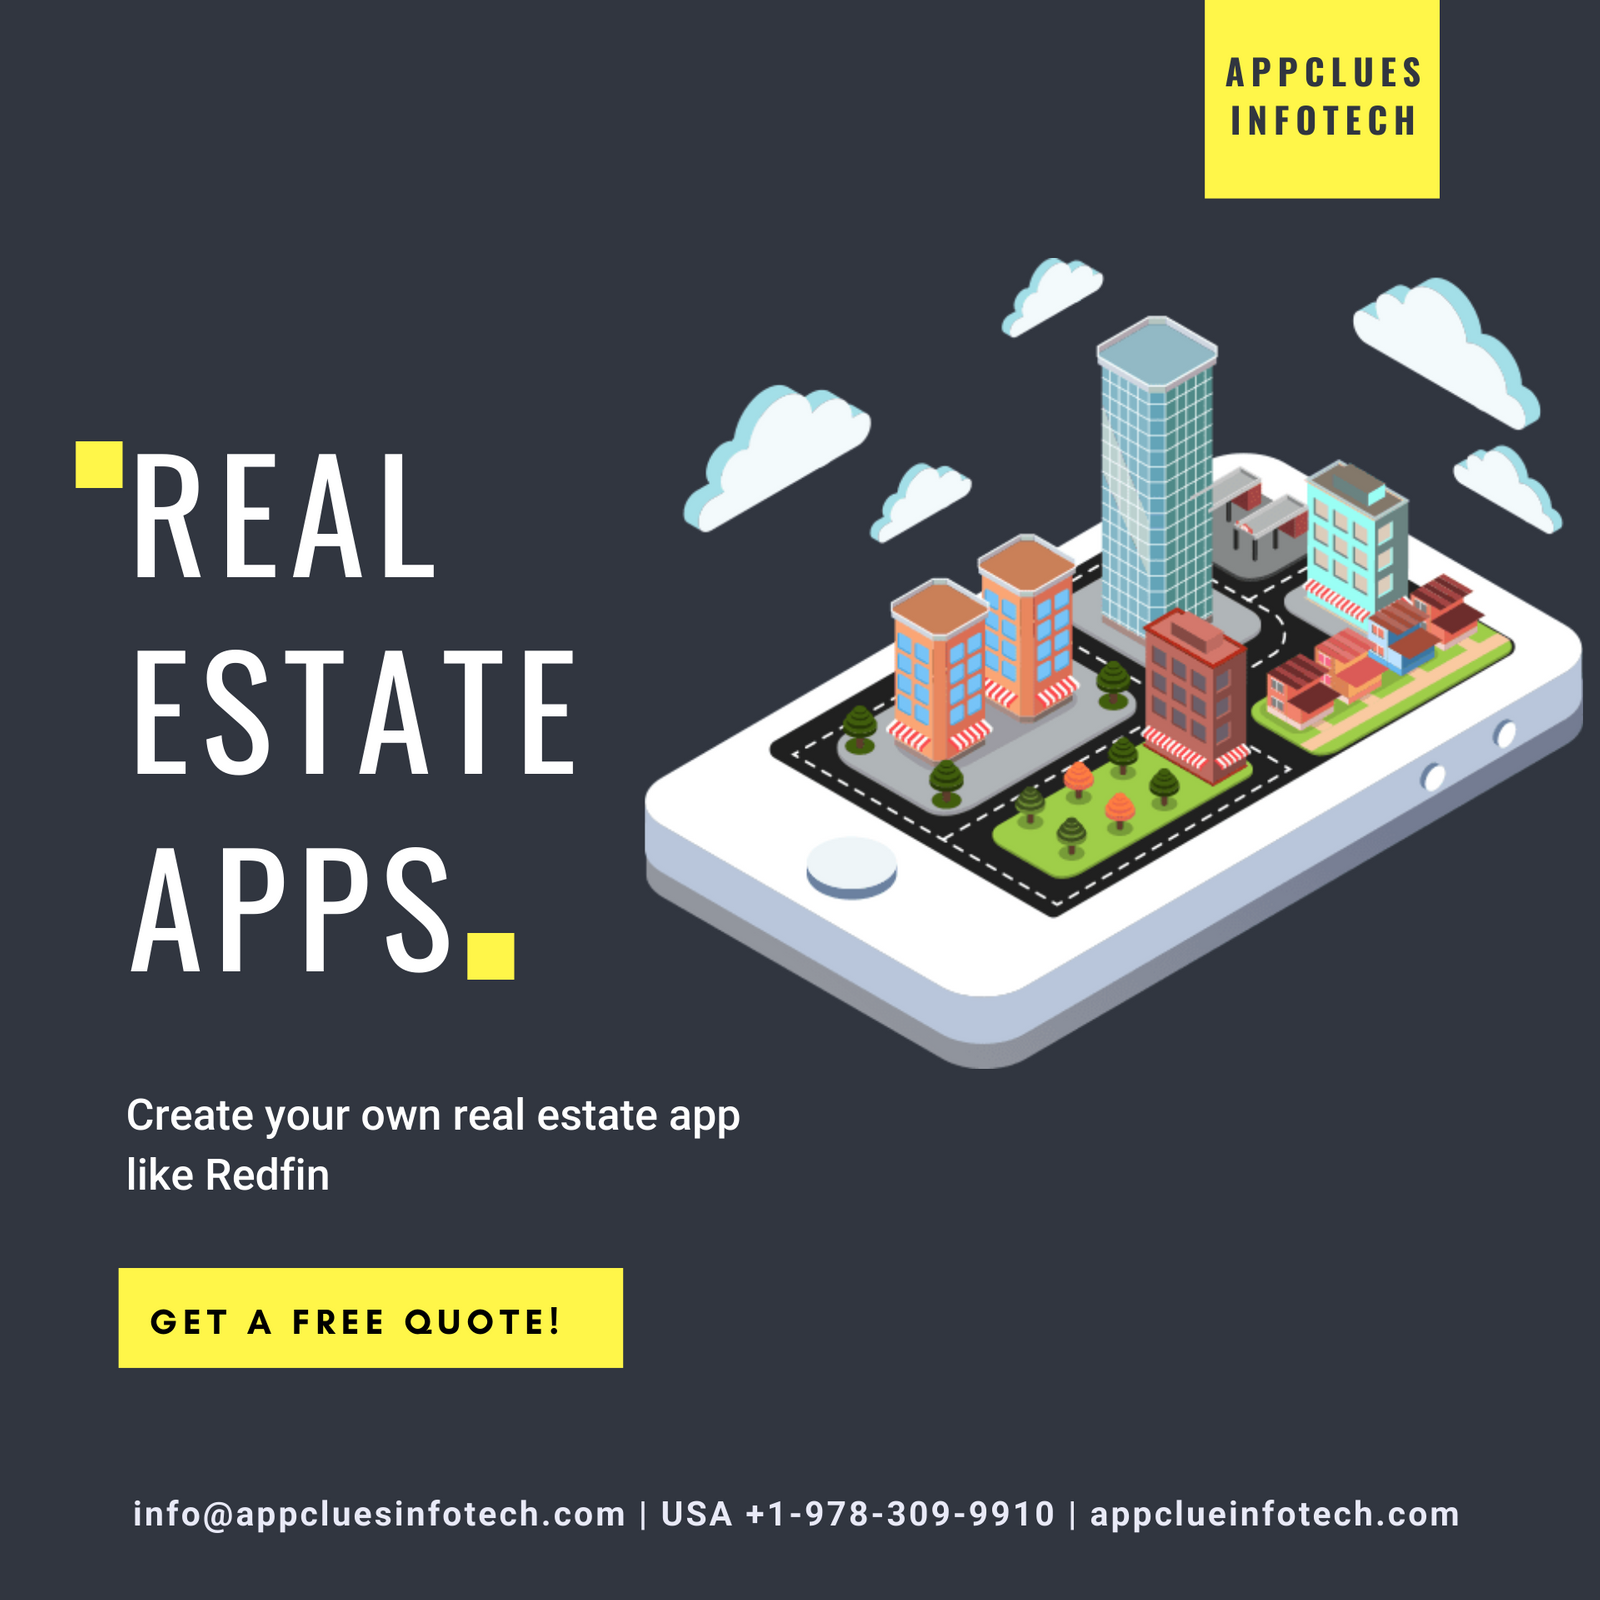 Real Estate Mobile App Development Company